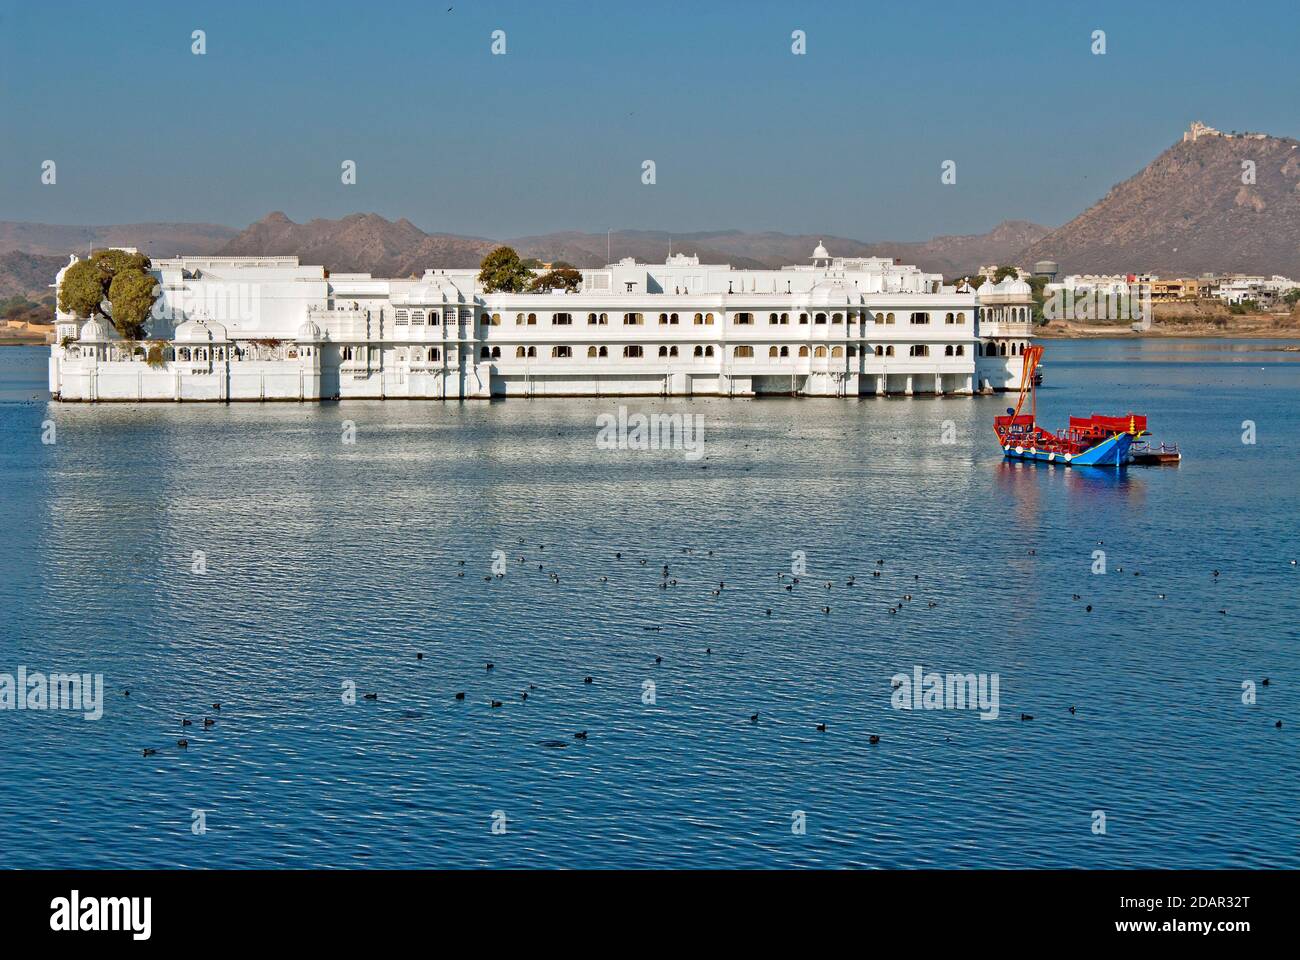 Taj Lake Palace am See Pichola in Udaipur Rajasthan Indien. Stockfoto